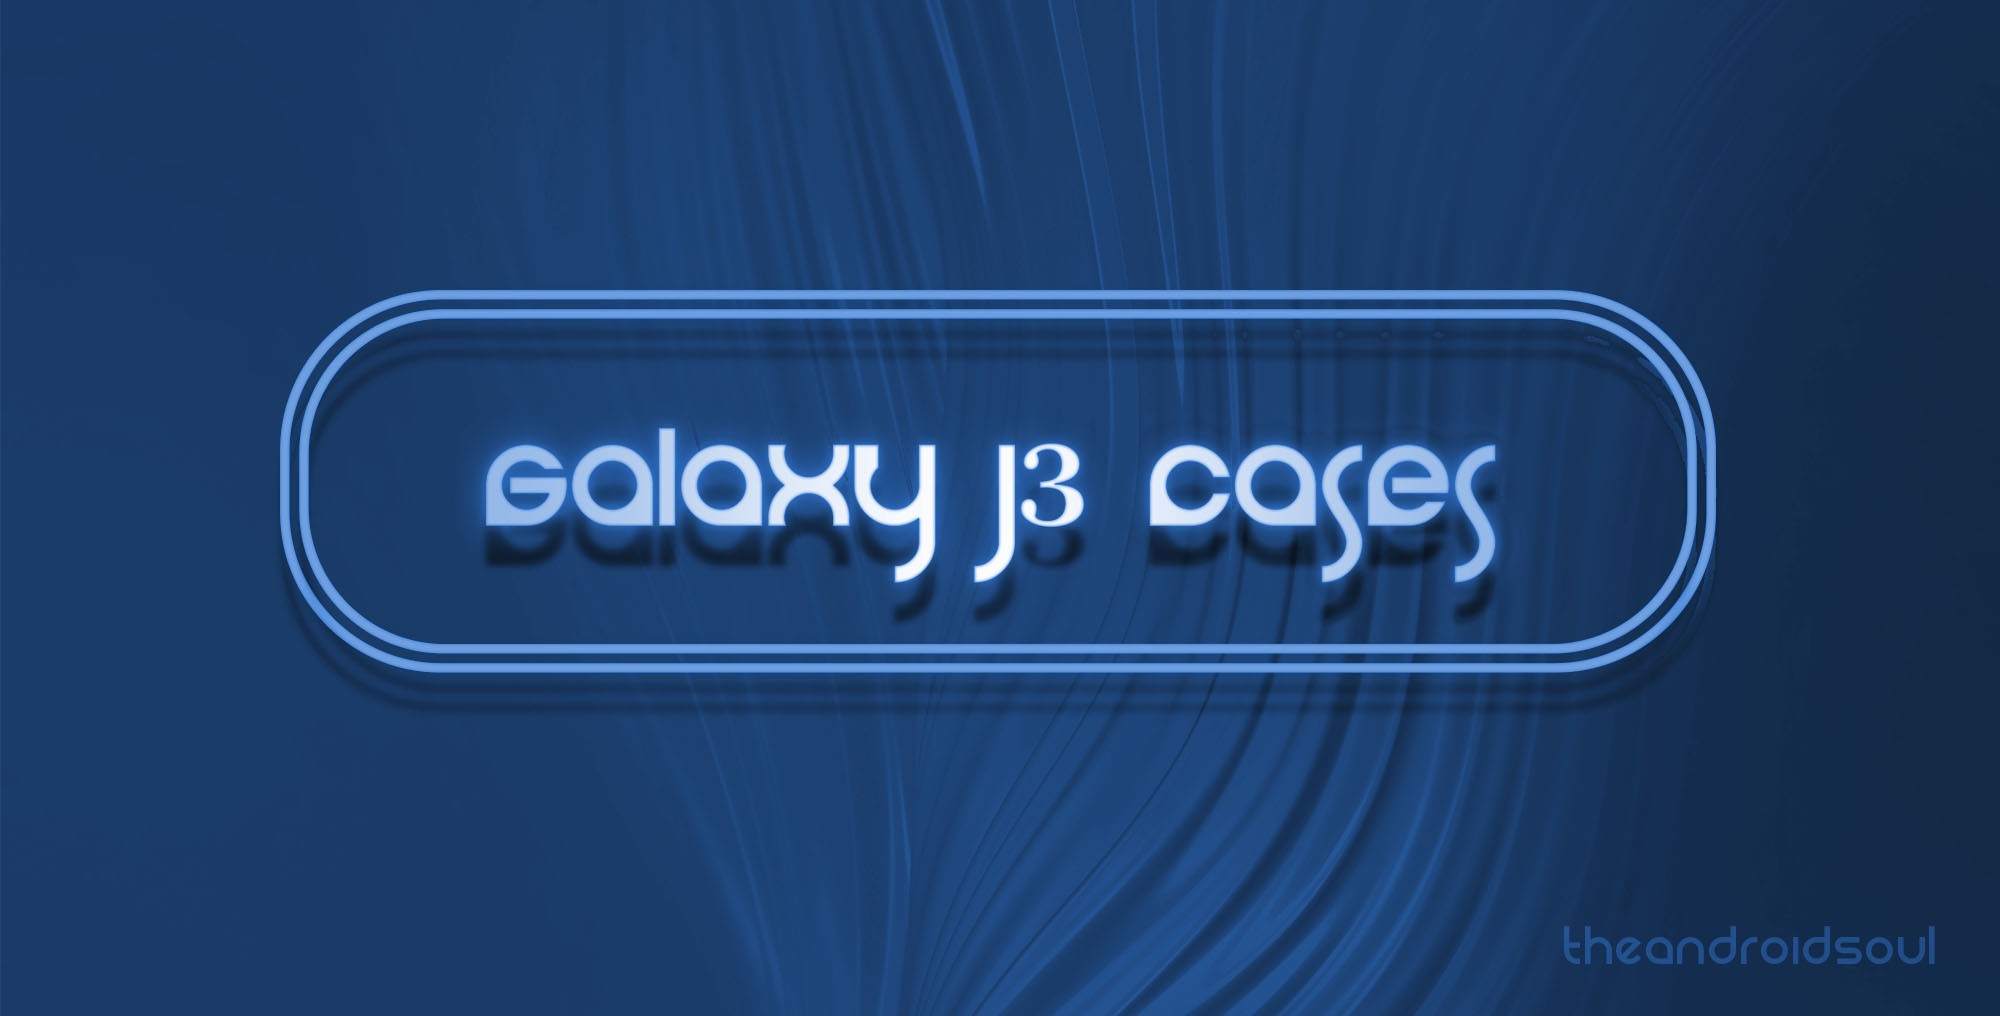 Galaxy J3 Star cases